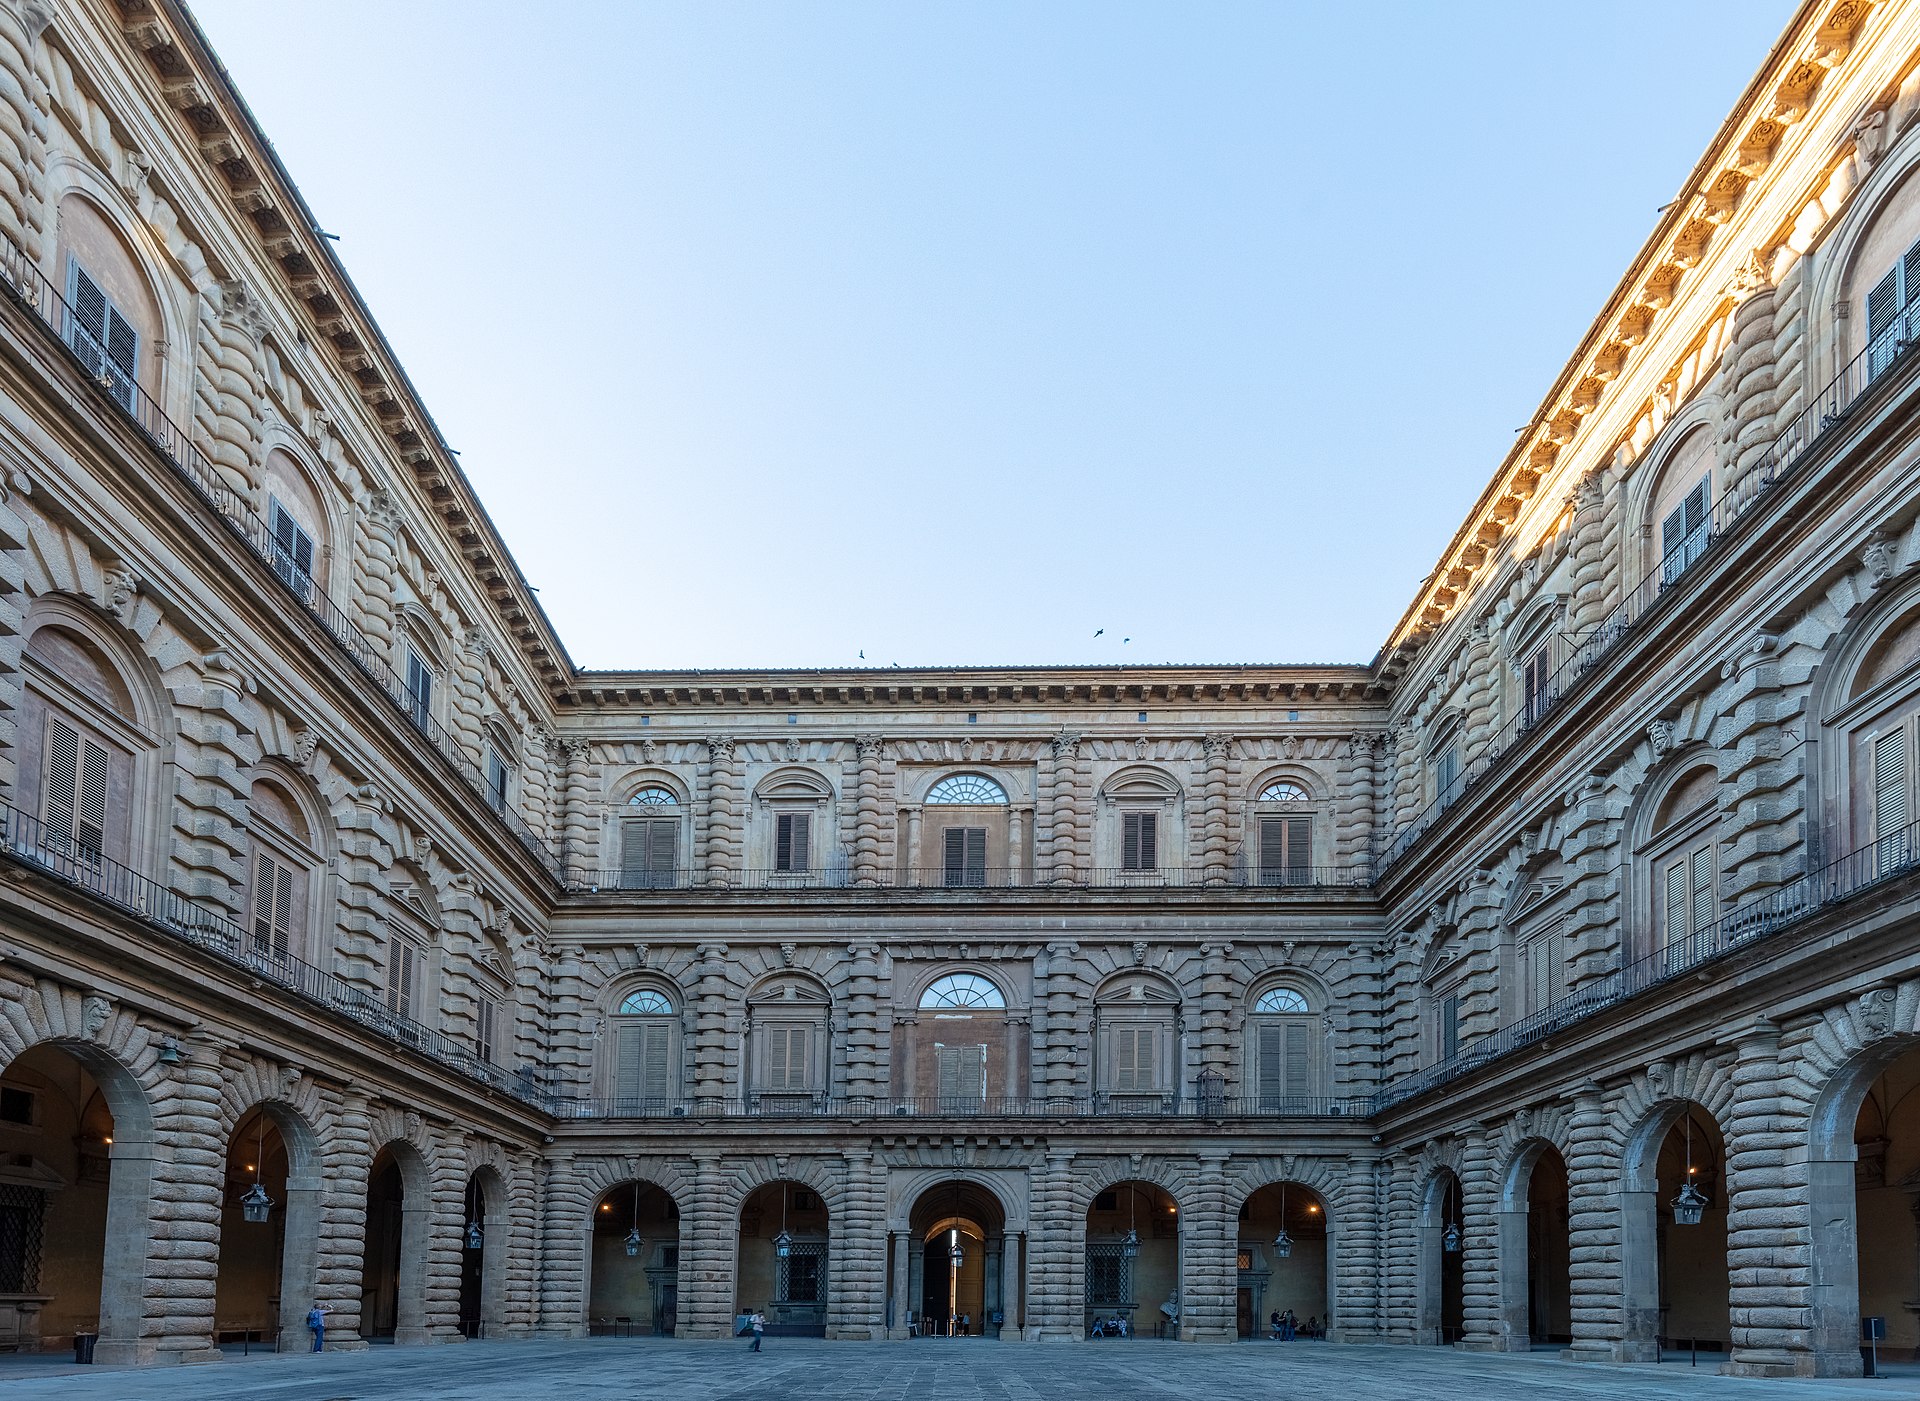 The inner courtyard of Palazzo Pitti